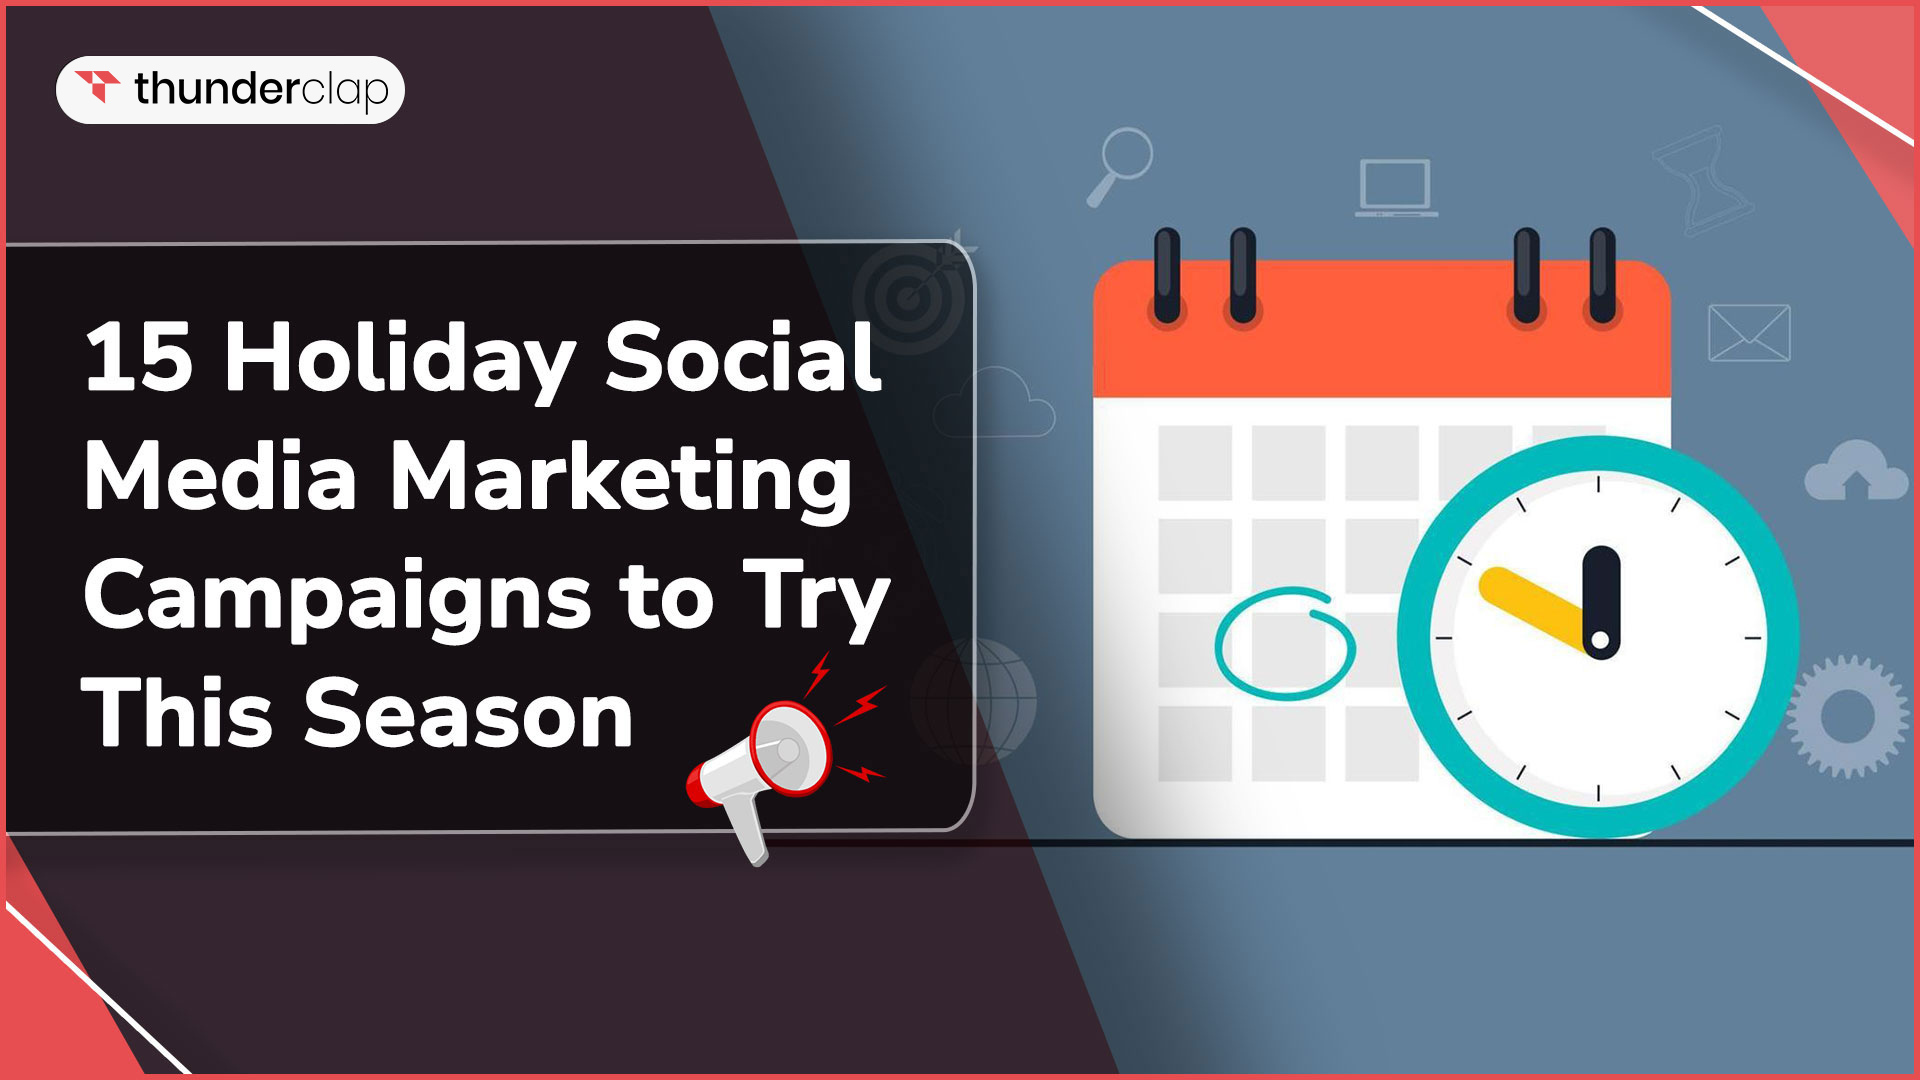 16 Holiday Social Media Marketing Campaigns
